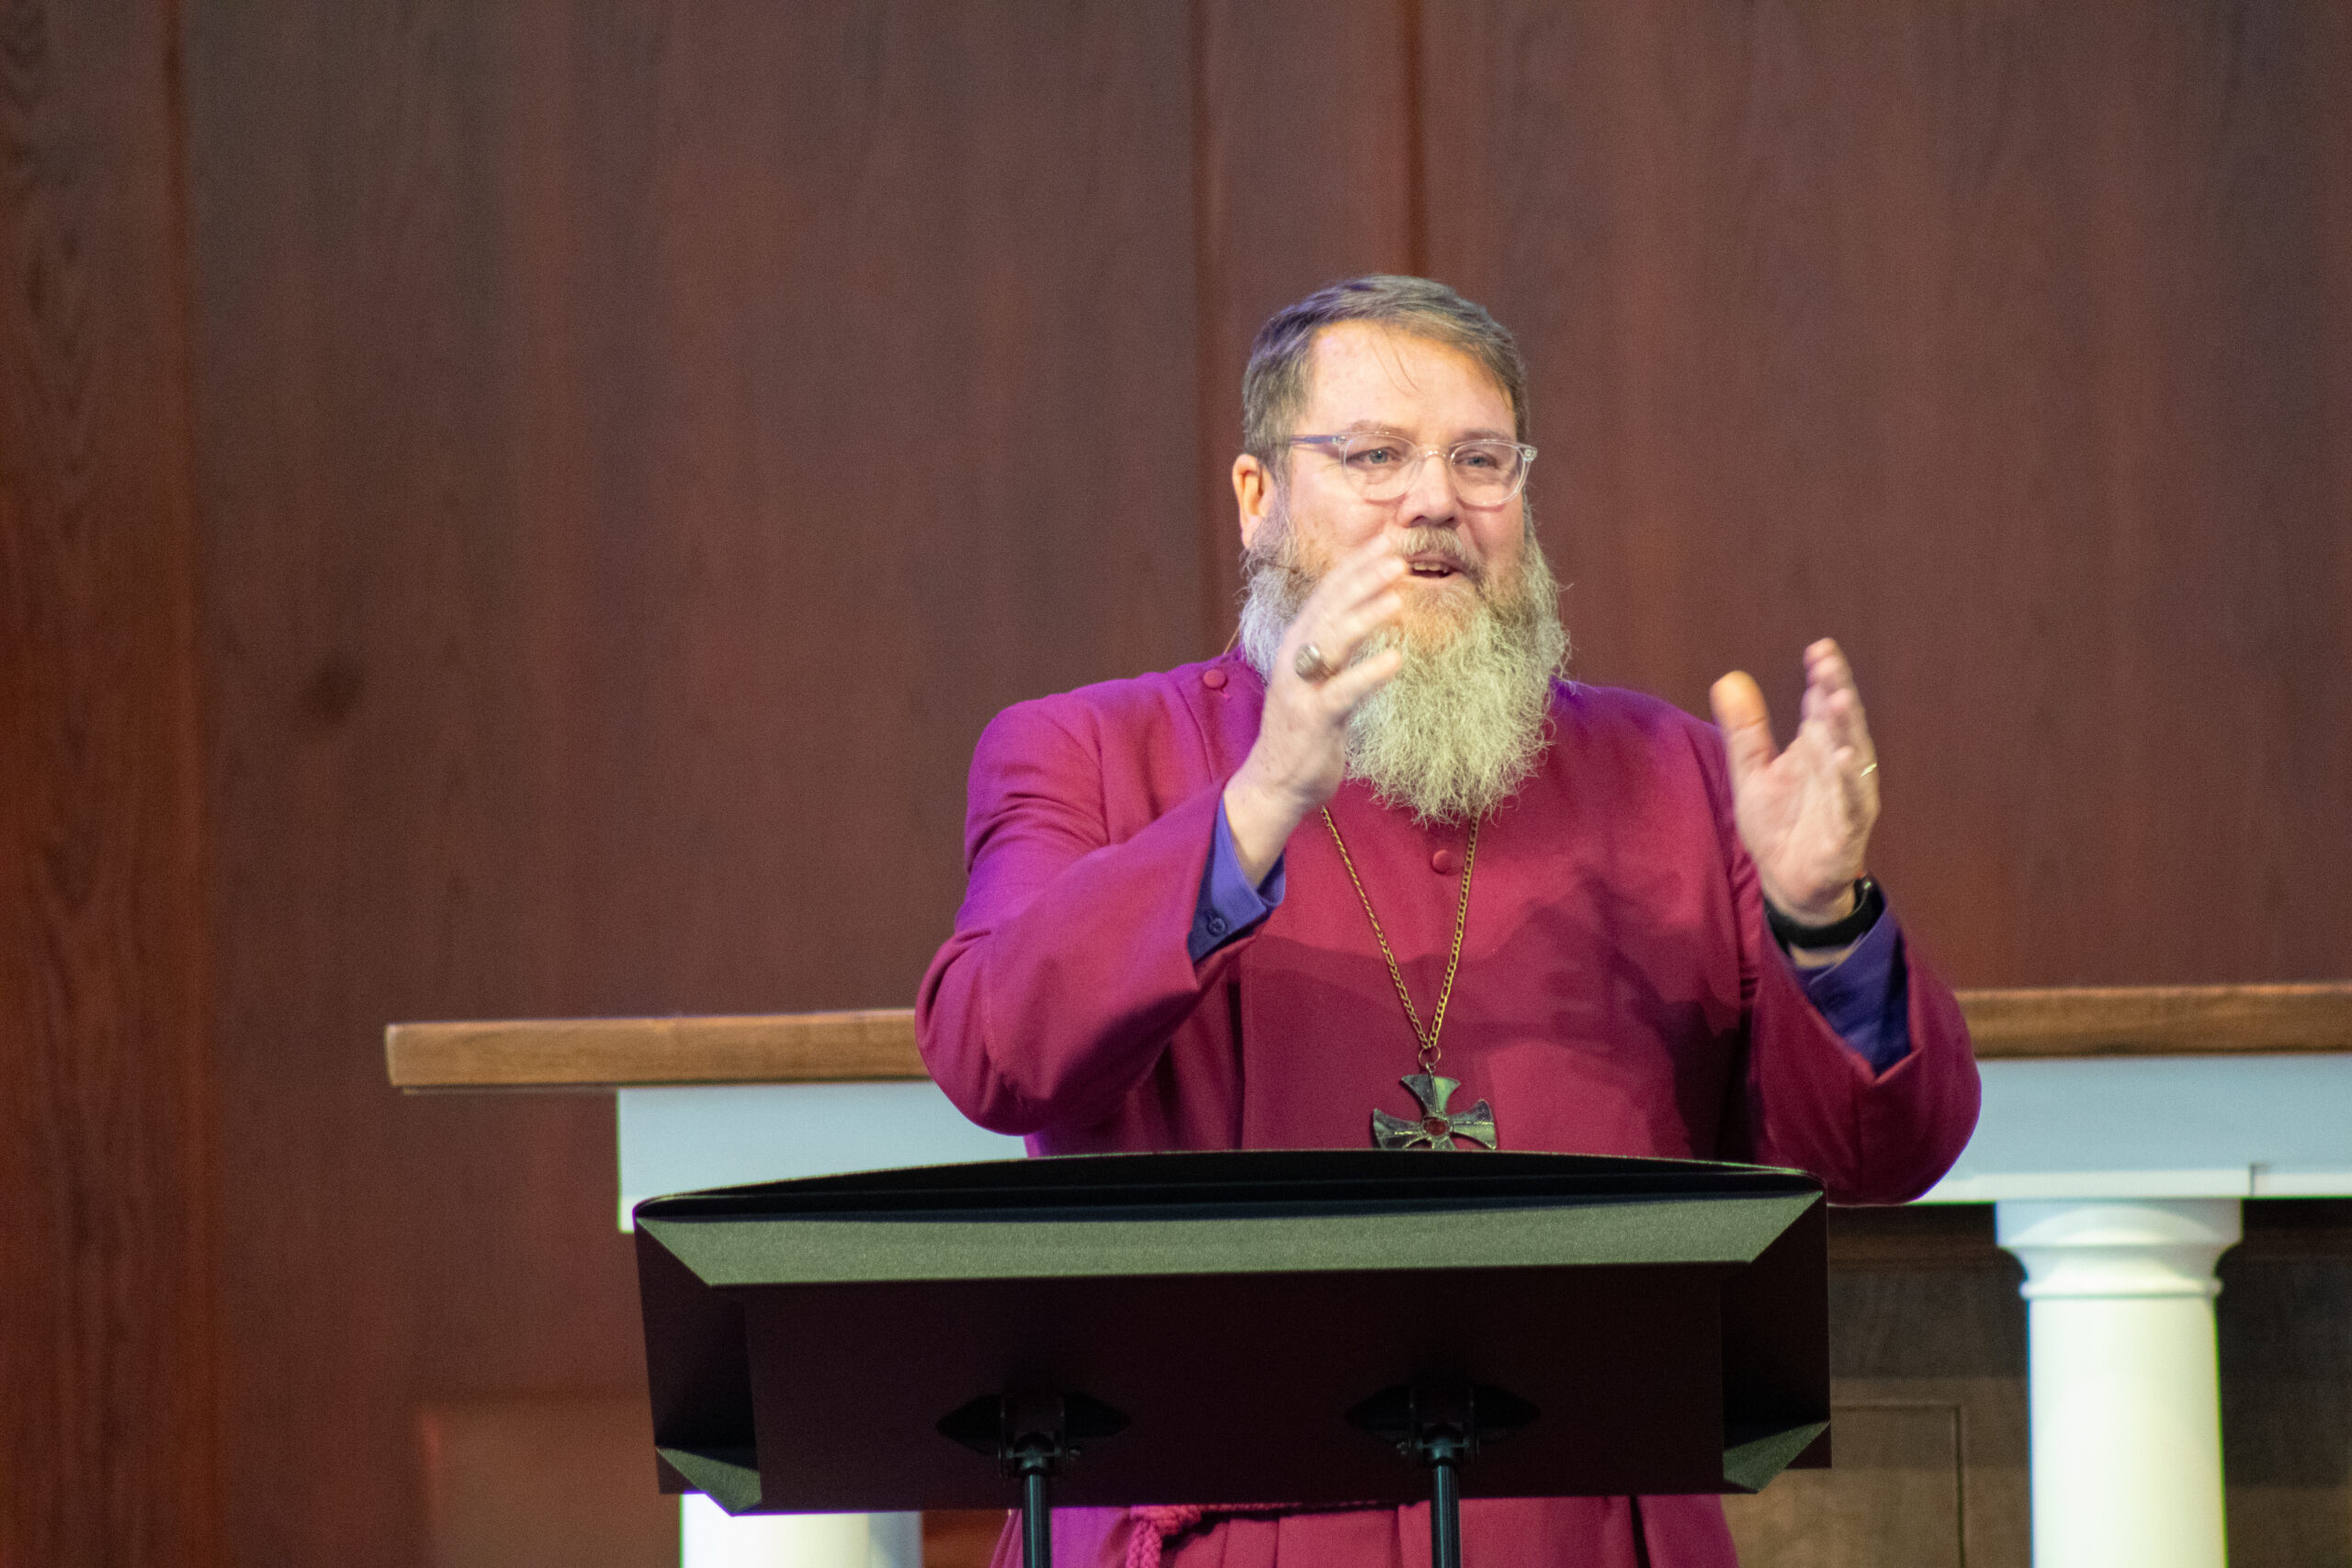 Bishop Eric Menees preaching a sermon